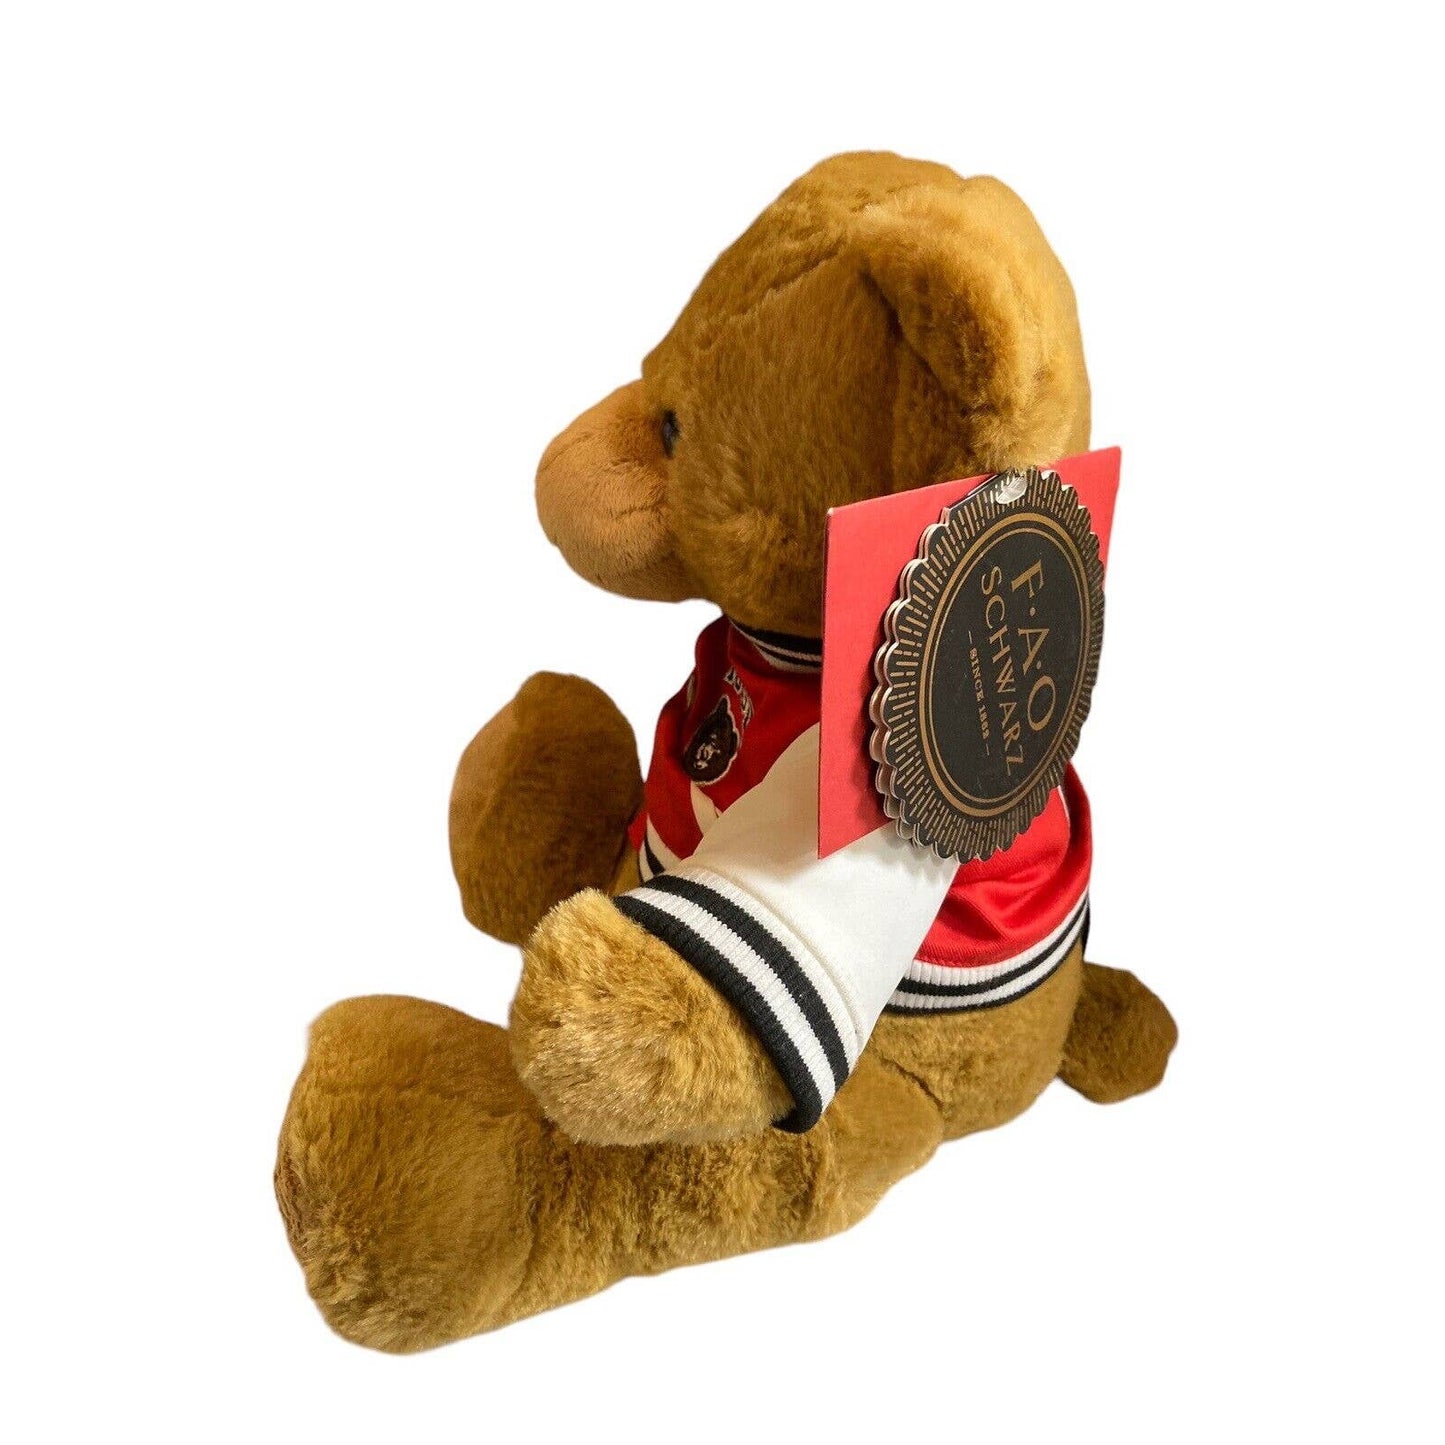 FAO Schwarz 12” Varsity Jacket Football Player Stuffed Teddy Bear Plush